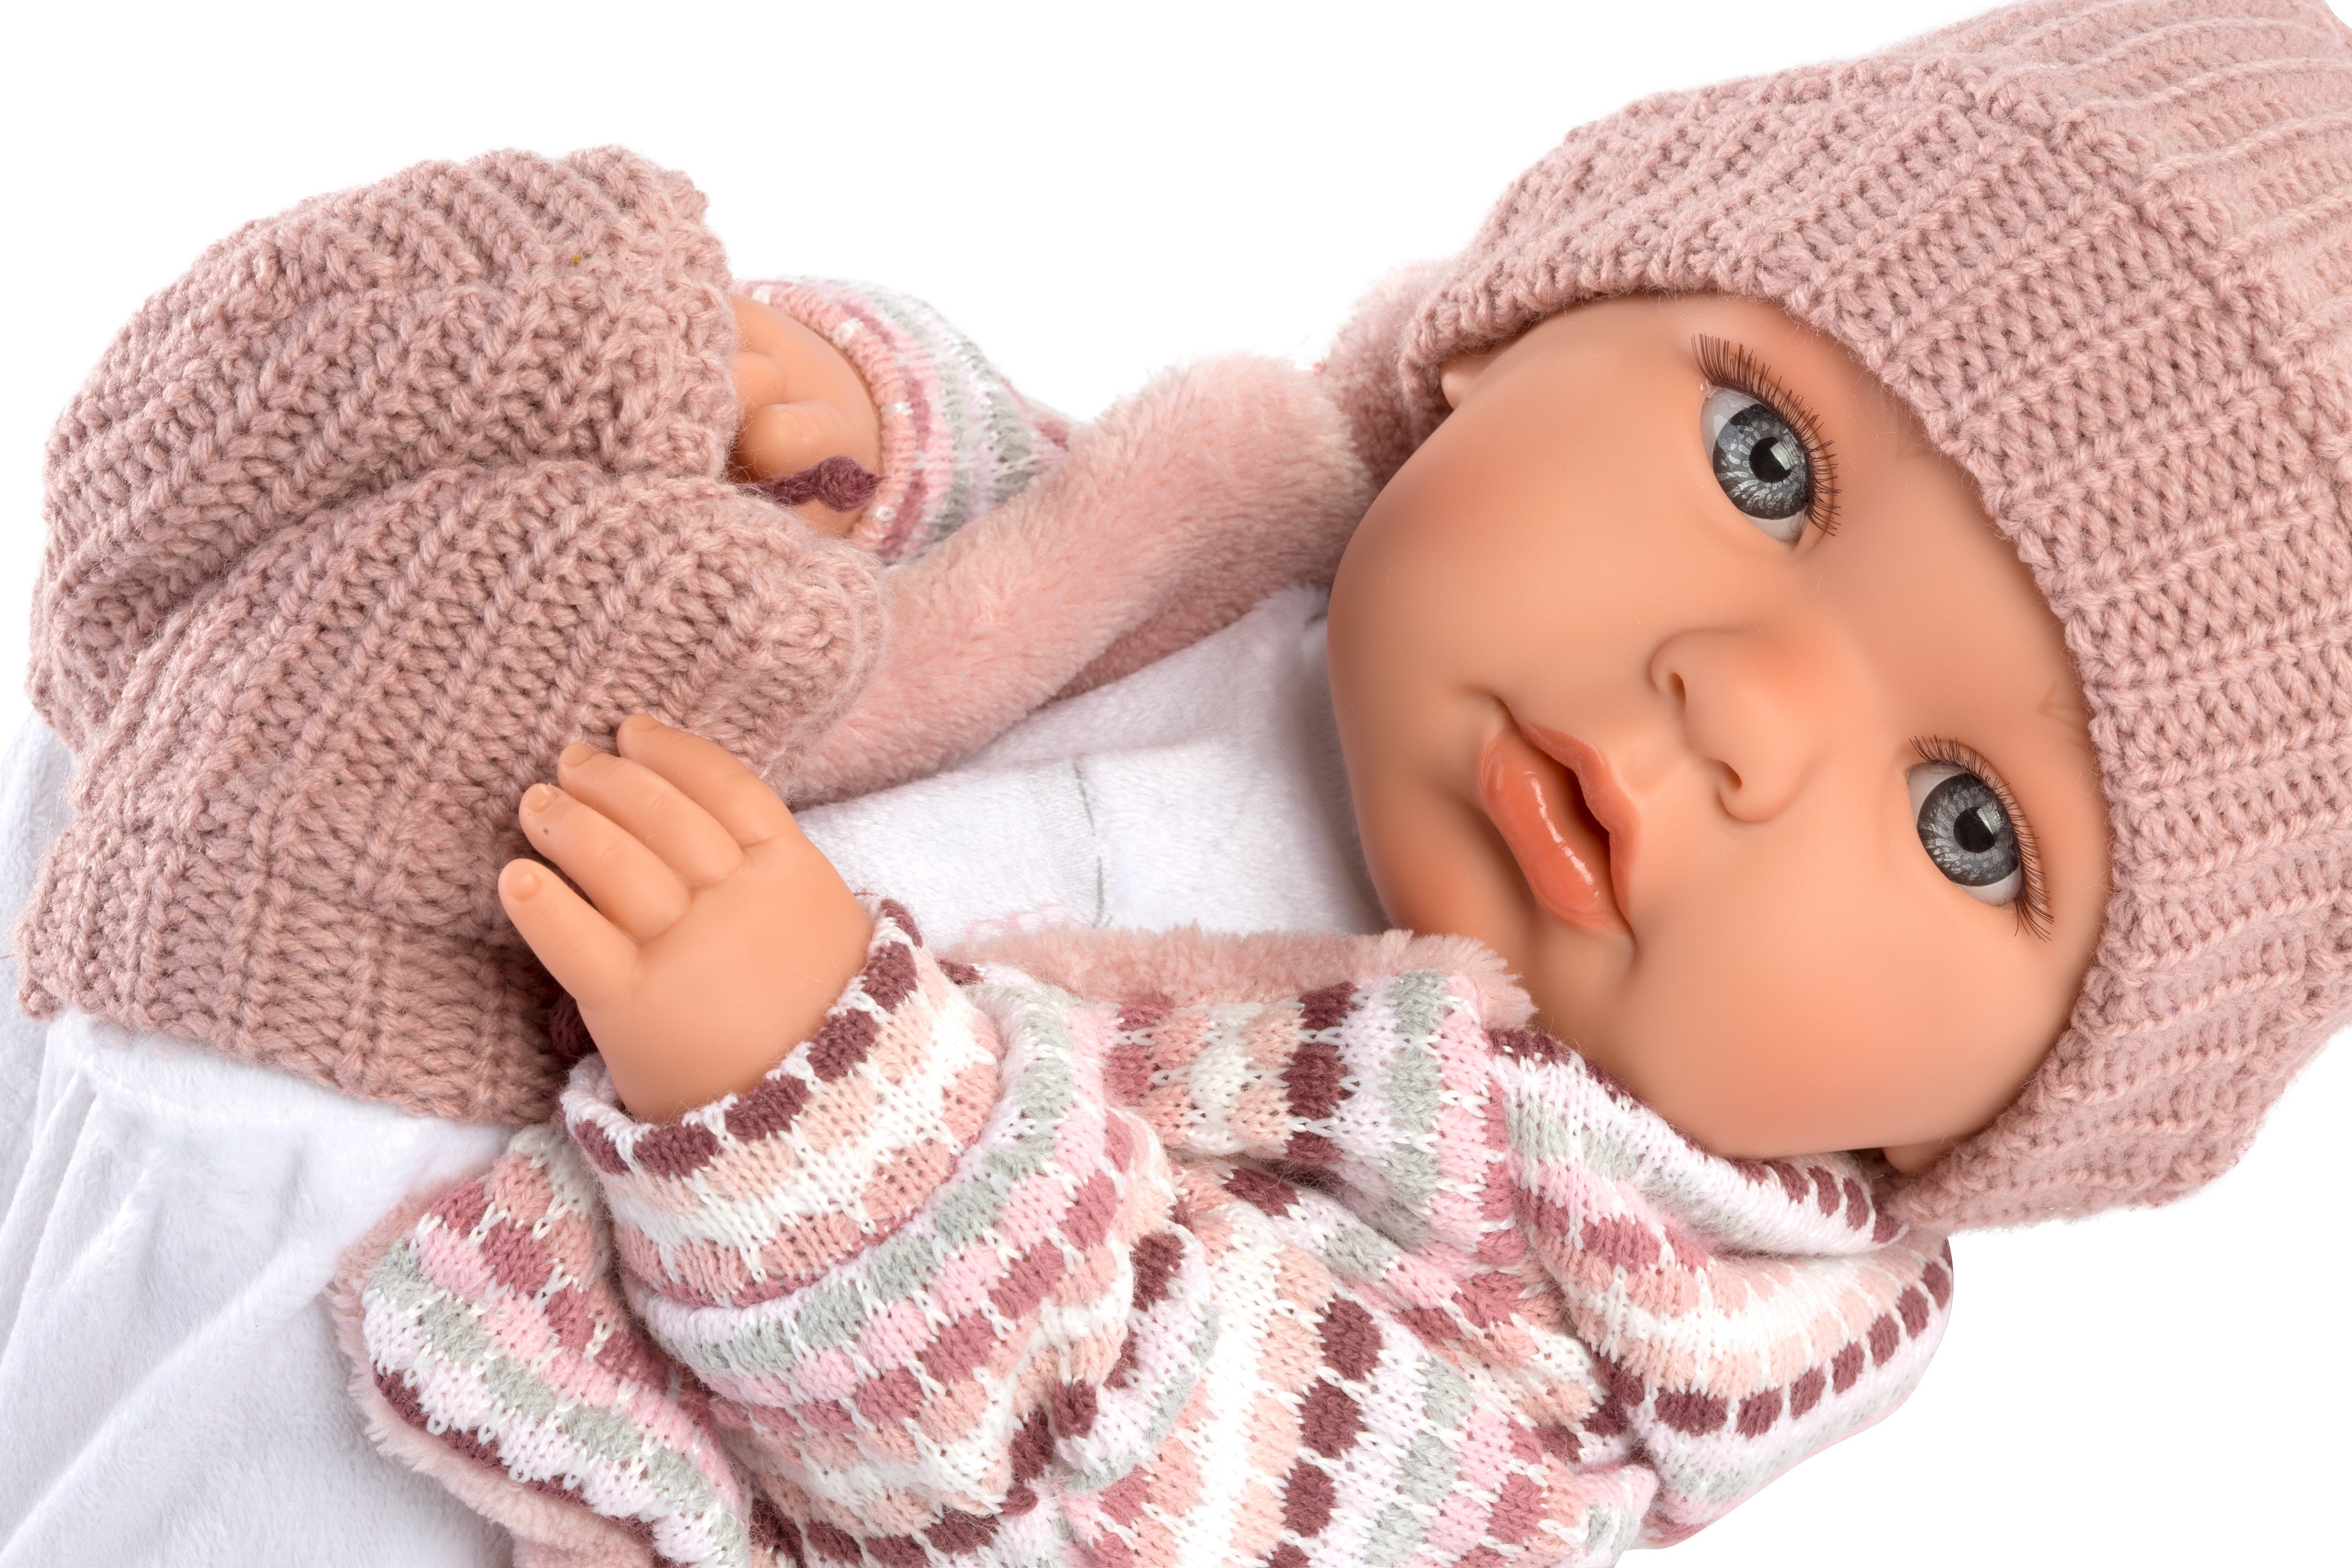 Llorens 16.5" Soft Body Crying Baby Doll Julia Dolls